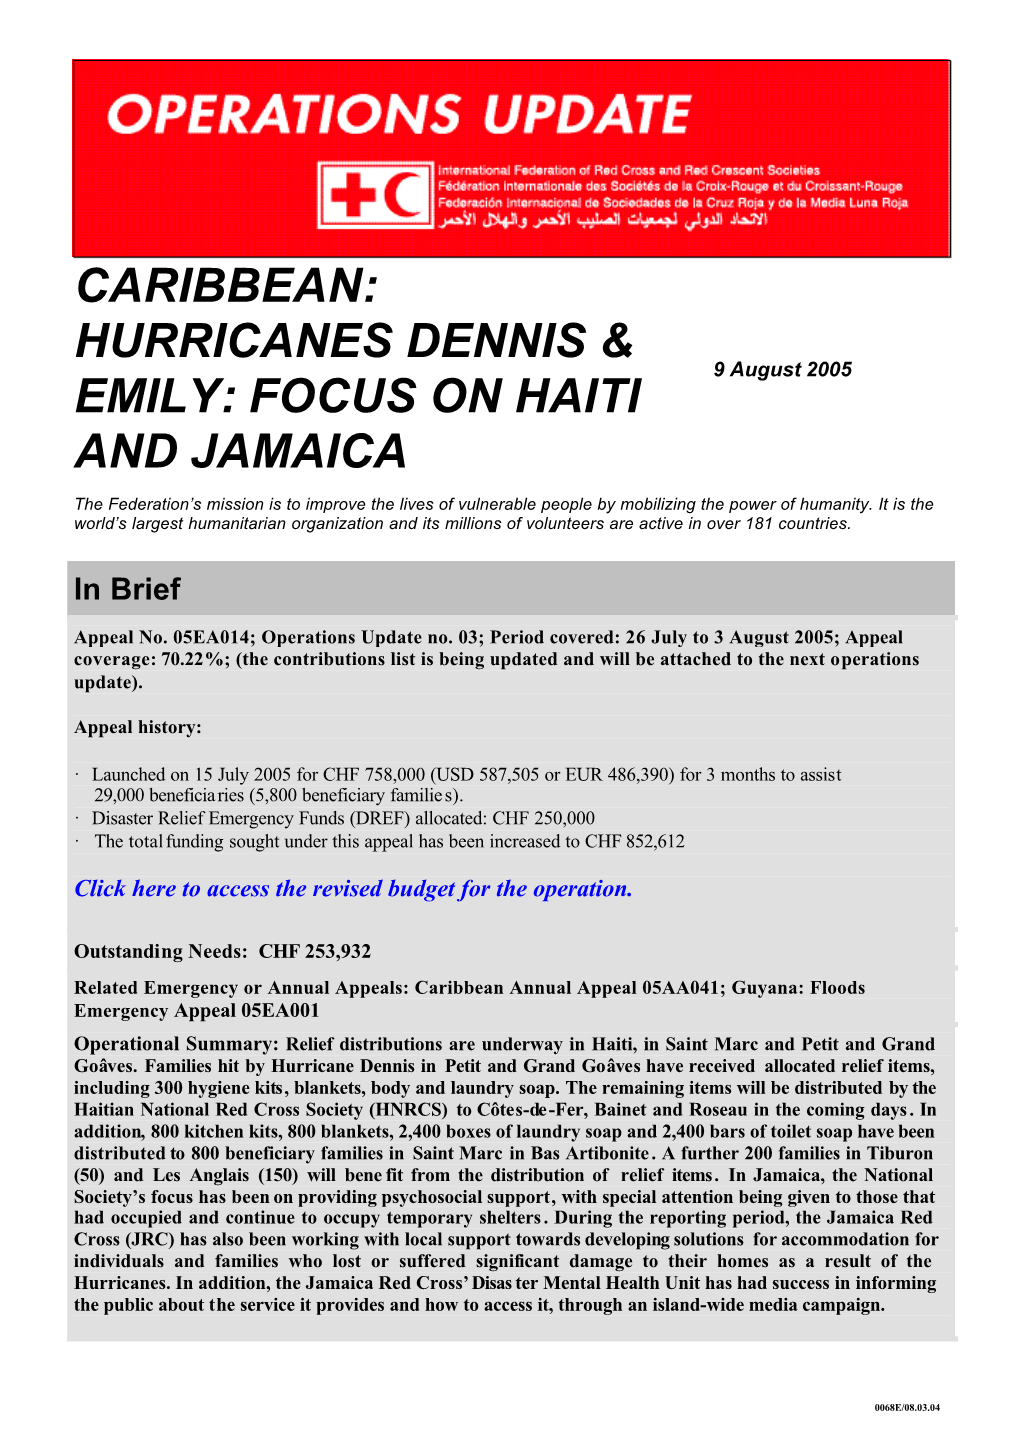 Caribbean: Hurricanes Dennis & Emily